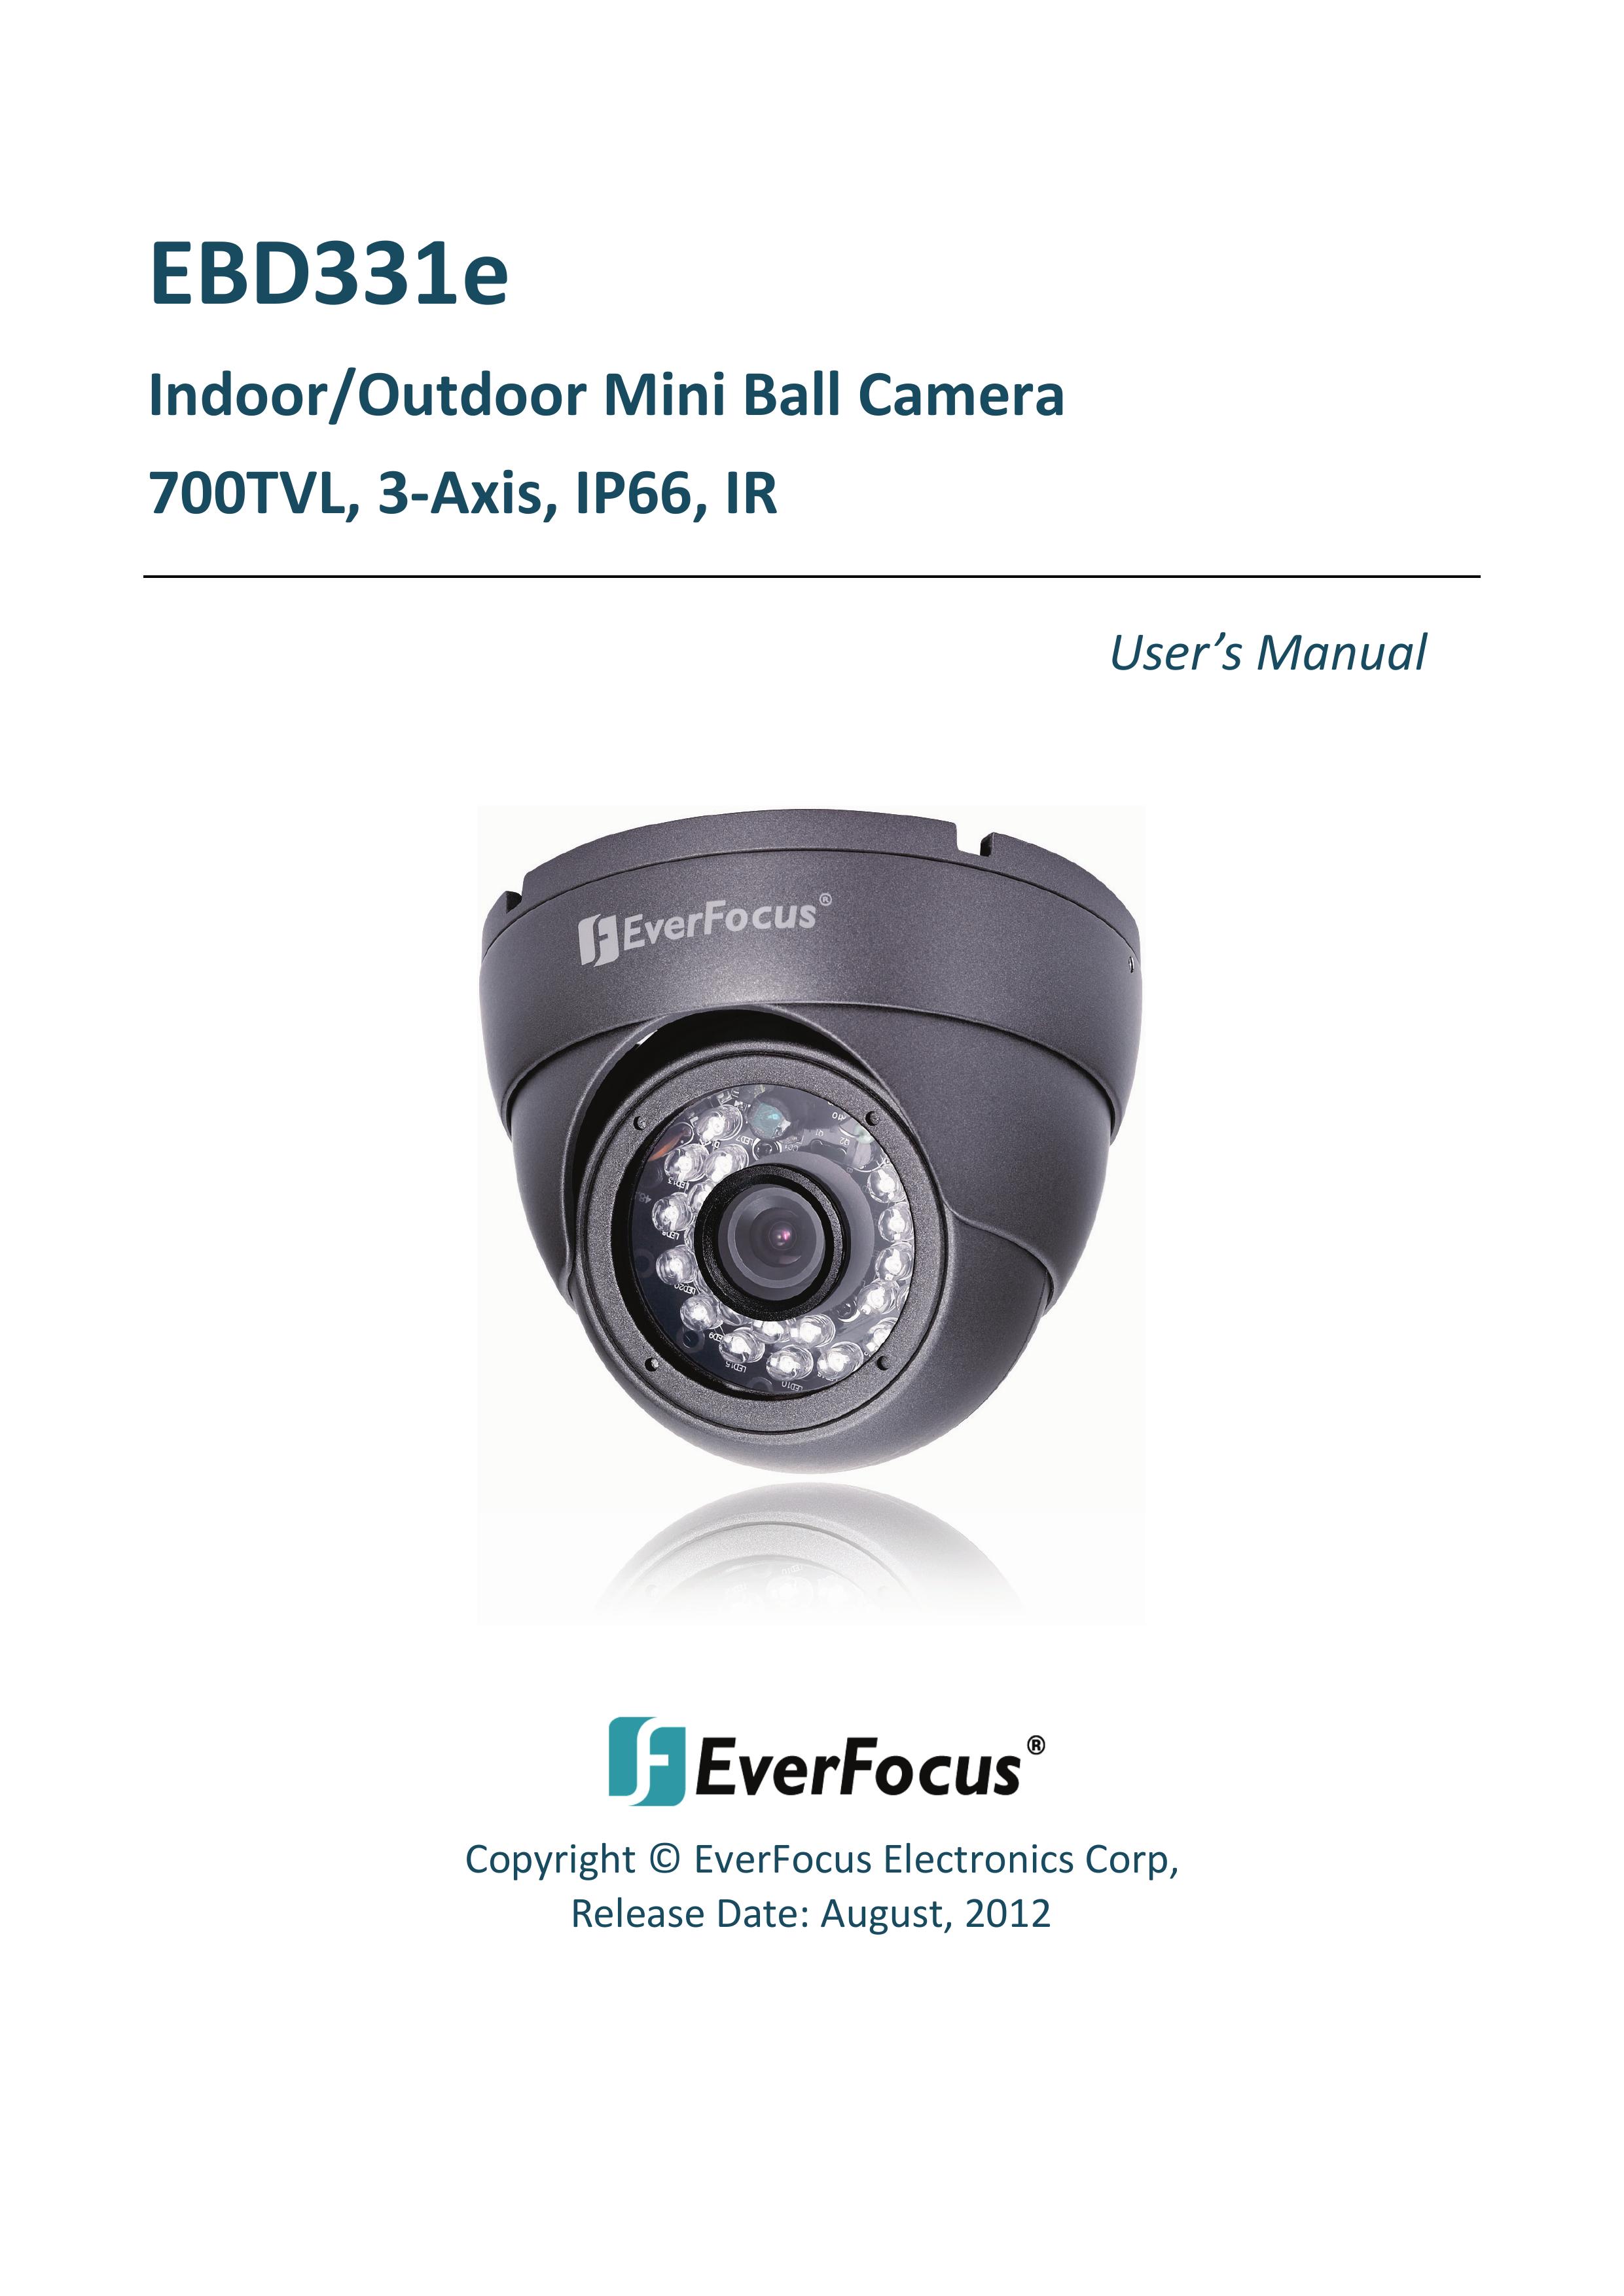 EverFocus EBD331e Camcorder User Manual